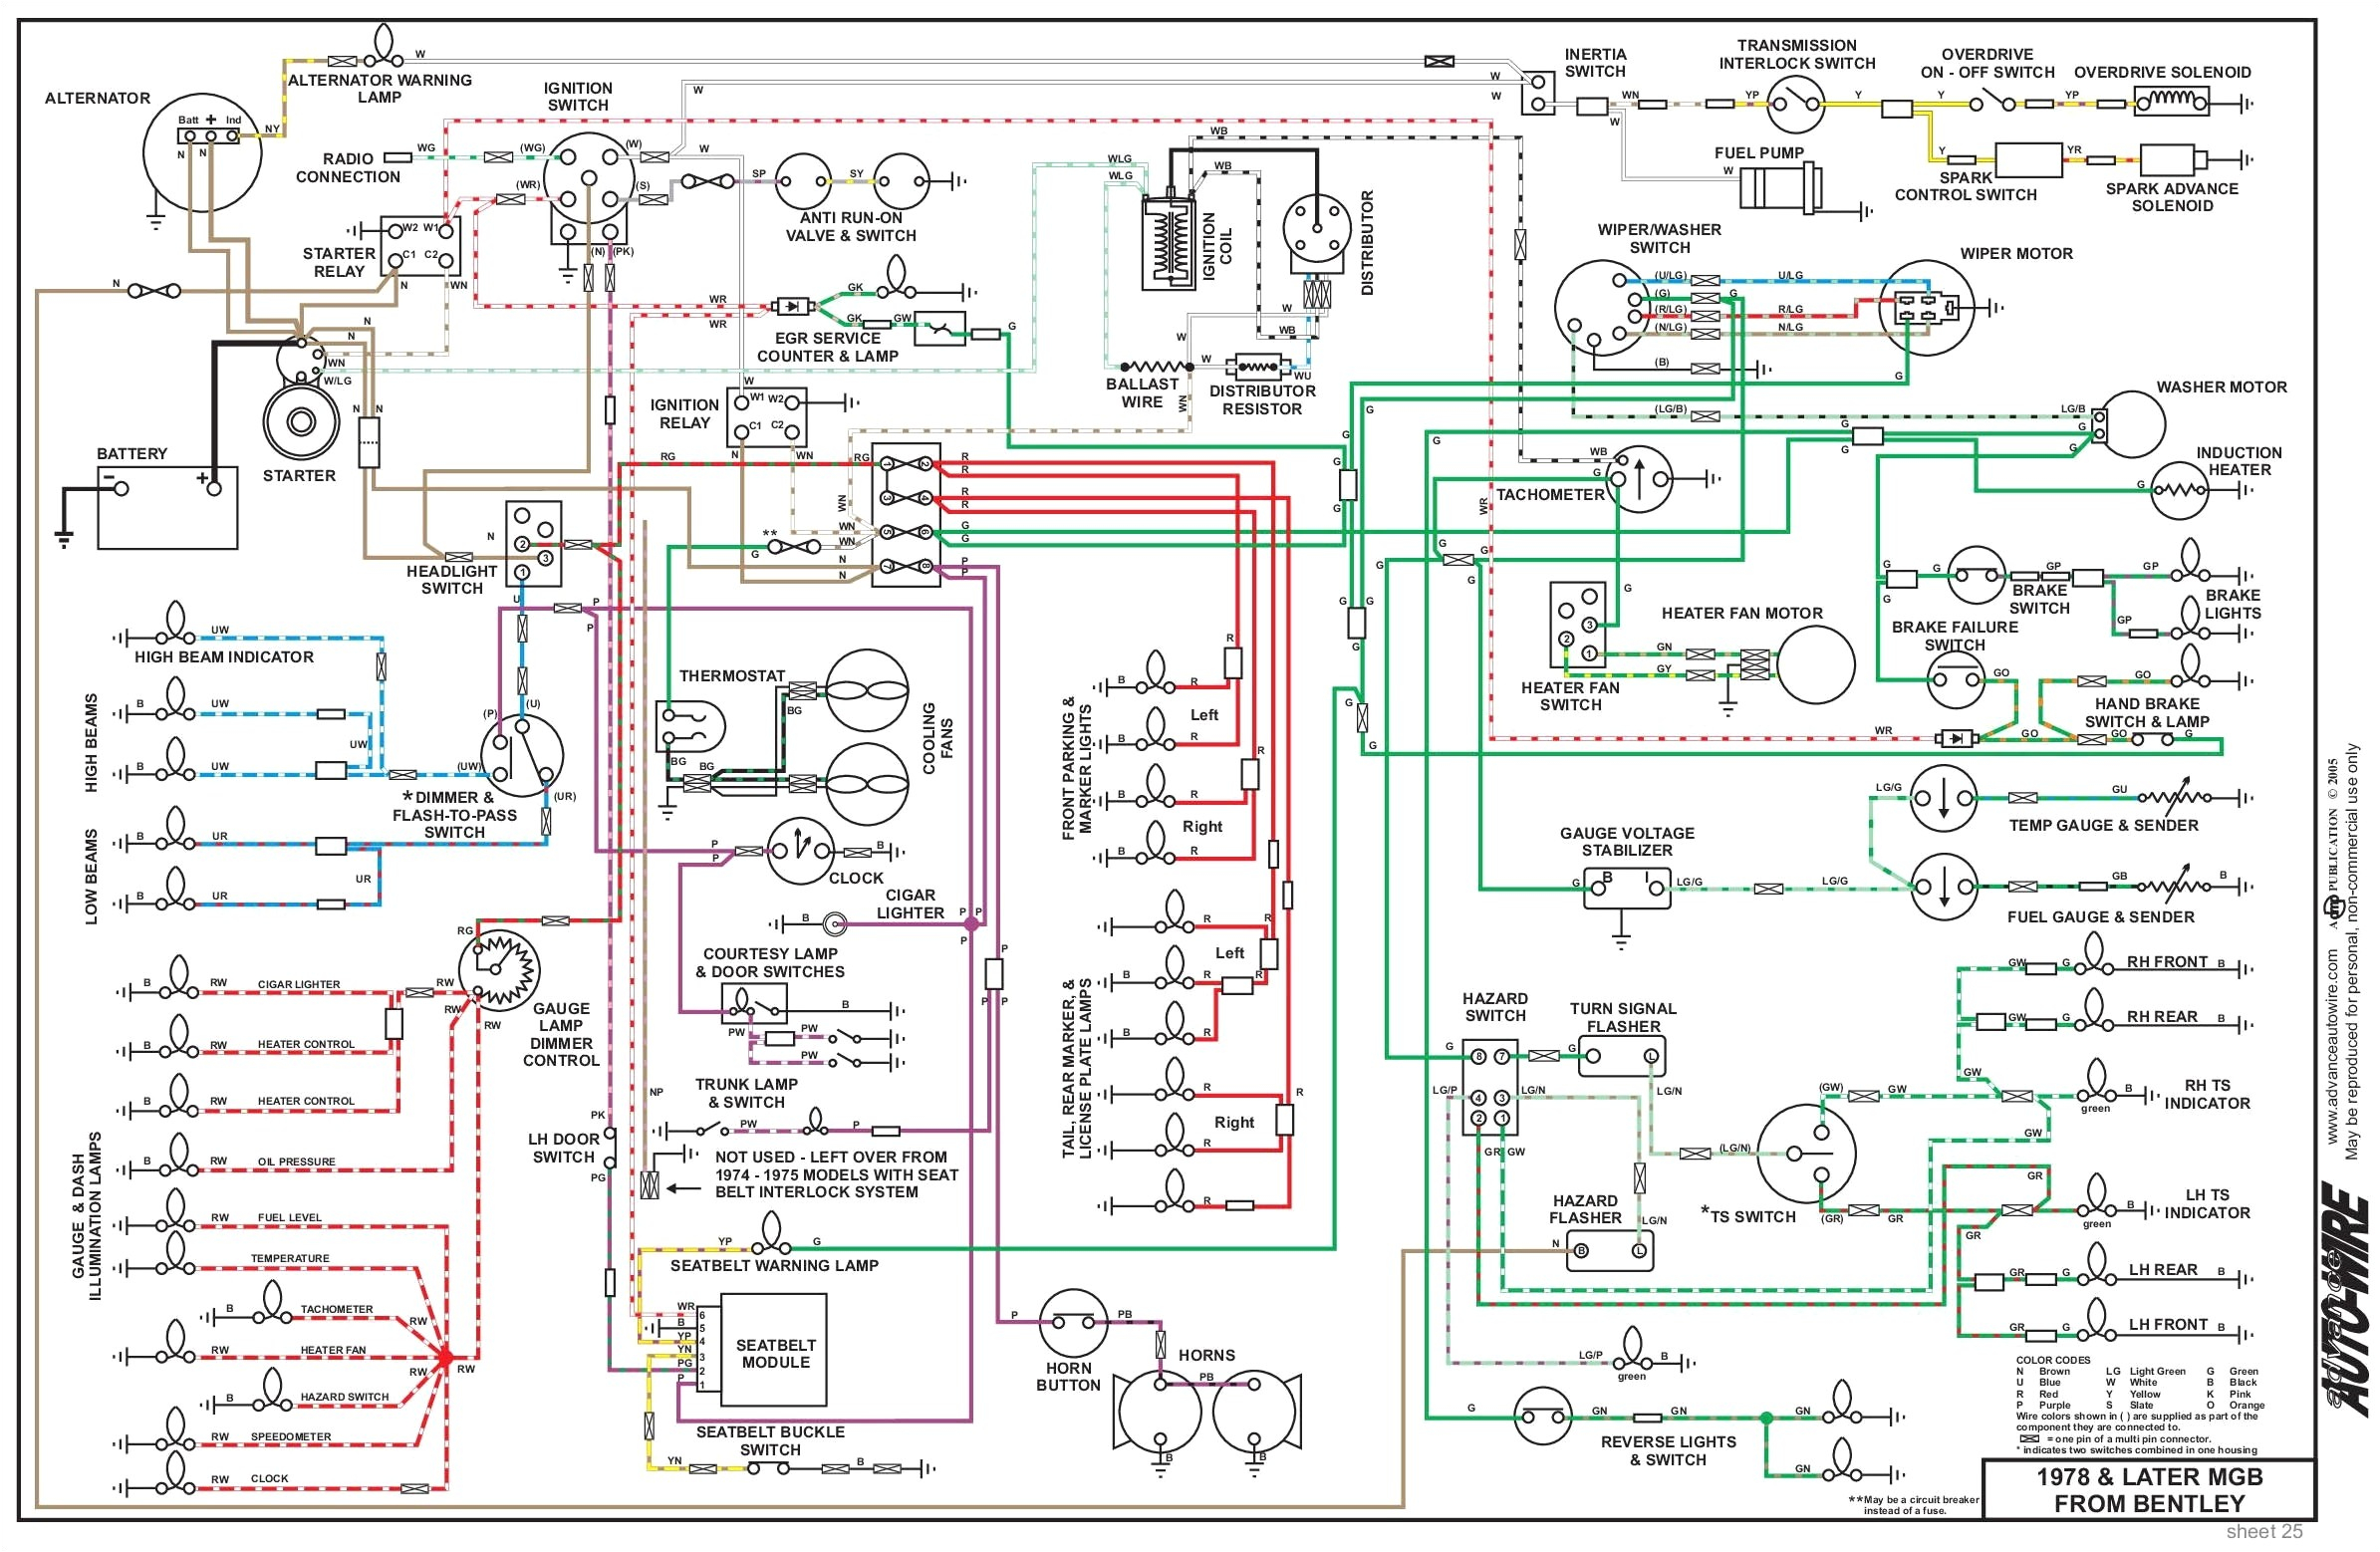 1977 mg mgb wiring diagram wiring diagram name 1973 mg mgb wiring diagram schematic wiring diagram